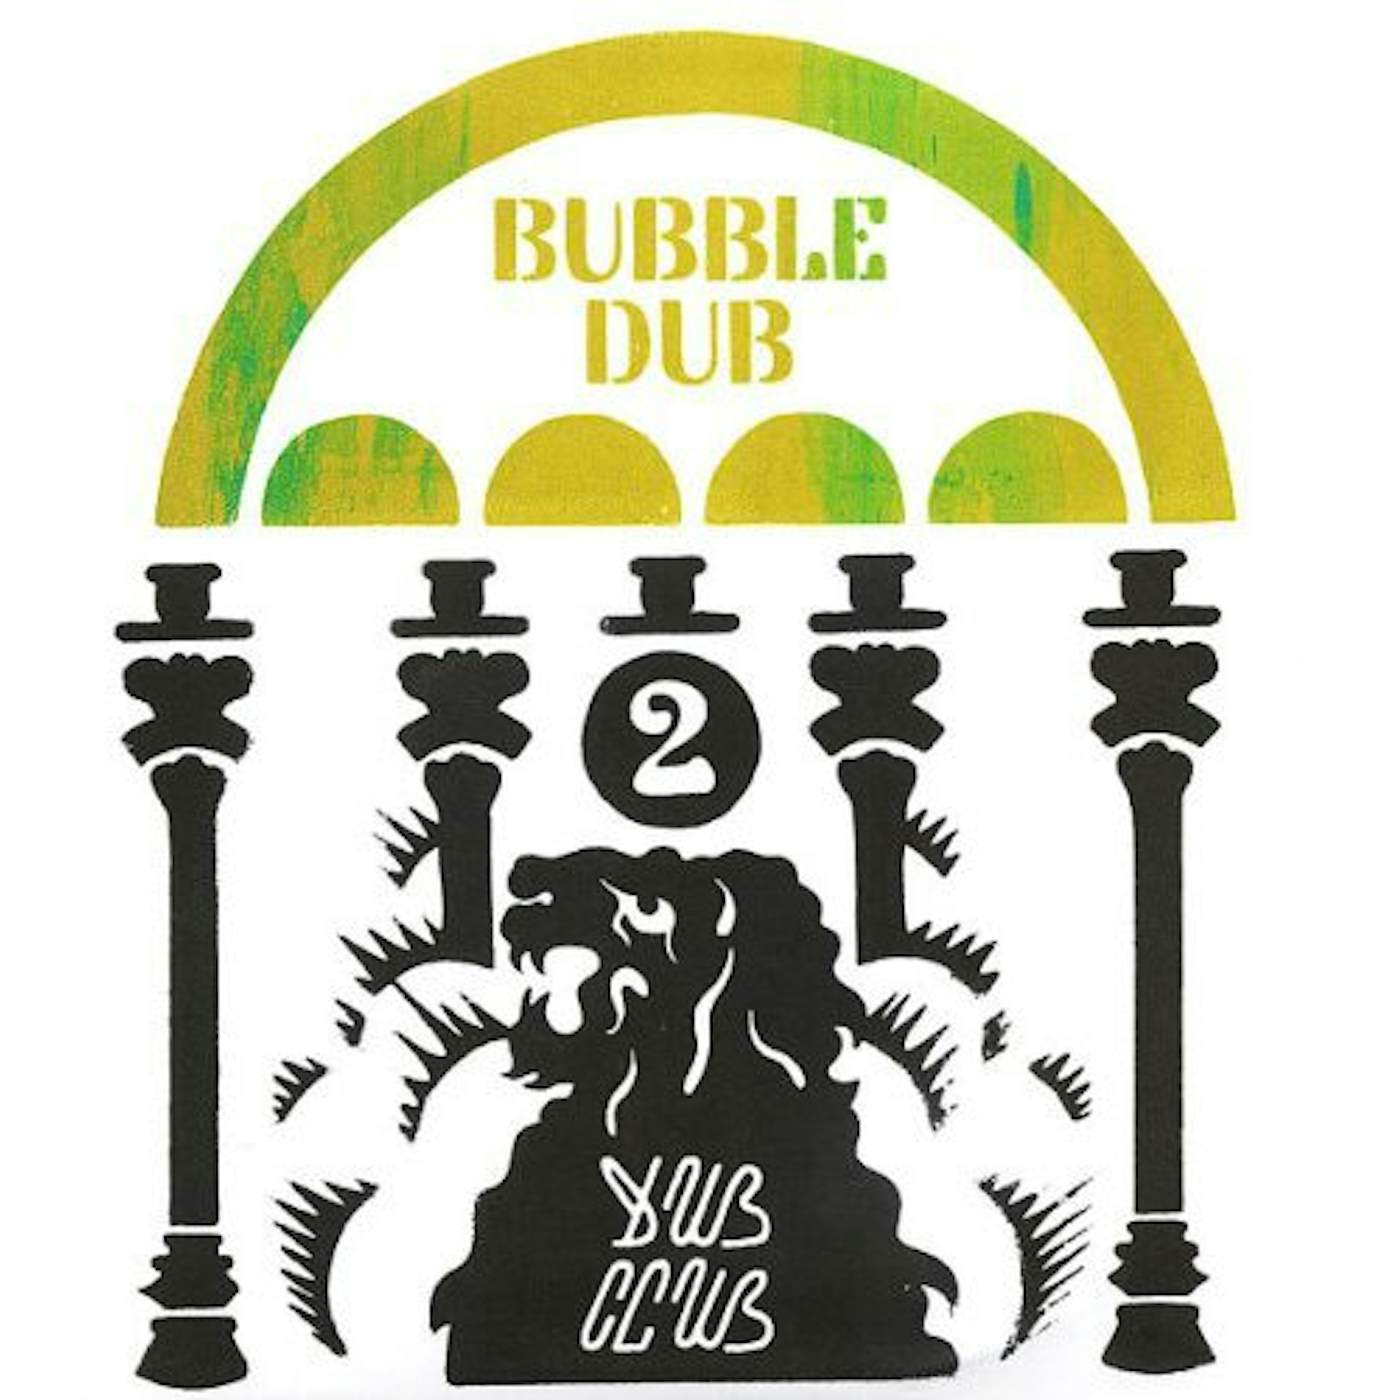 Dub Club BUBBLE DUB Vinyl Record